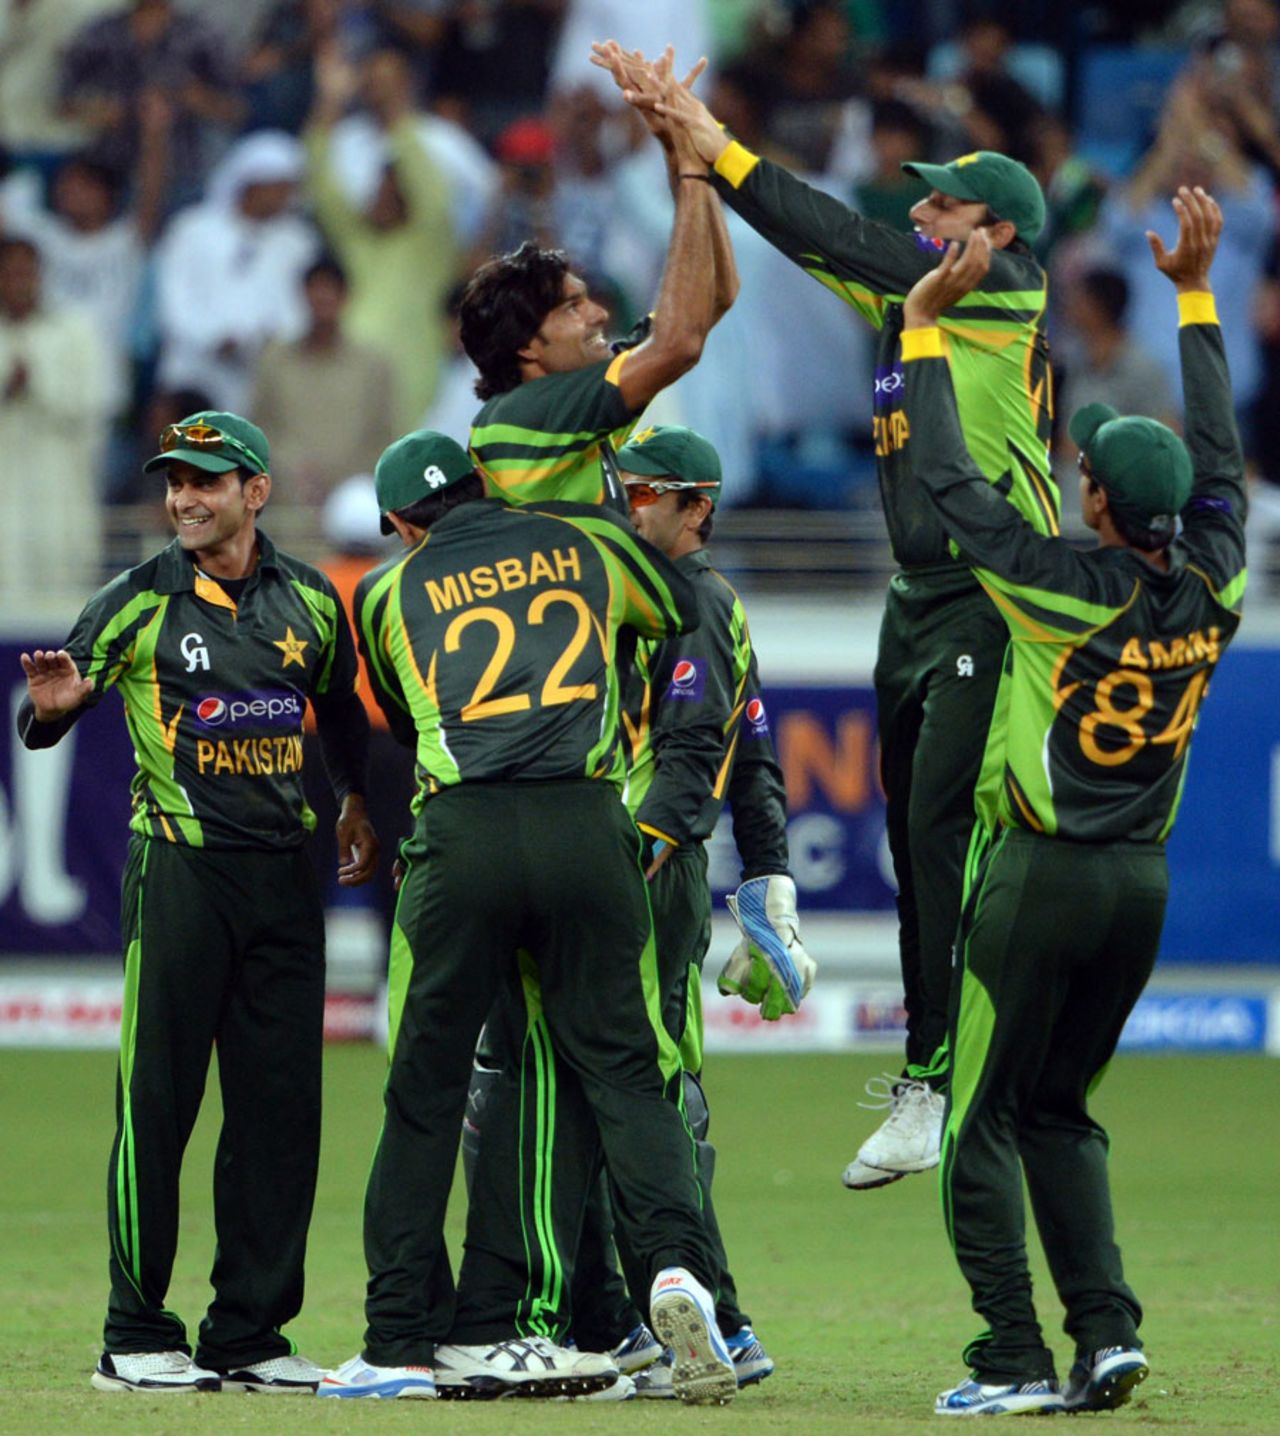 Team-mates congratulate Mohammad Irfan after JP Duminy's wicket, Pakistan v South Africa, 2nd ODI, Dubai, November 1, 2013